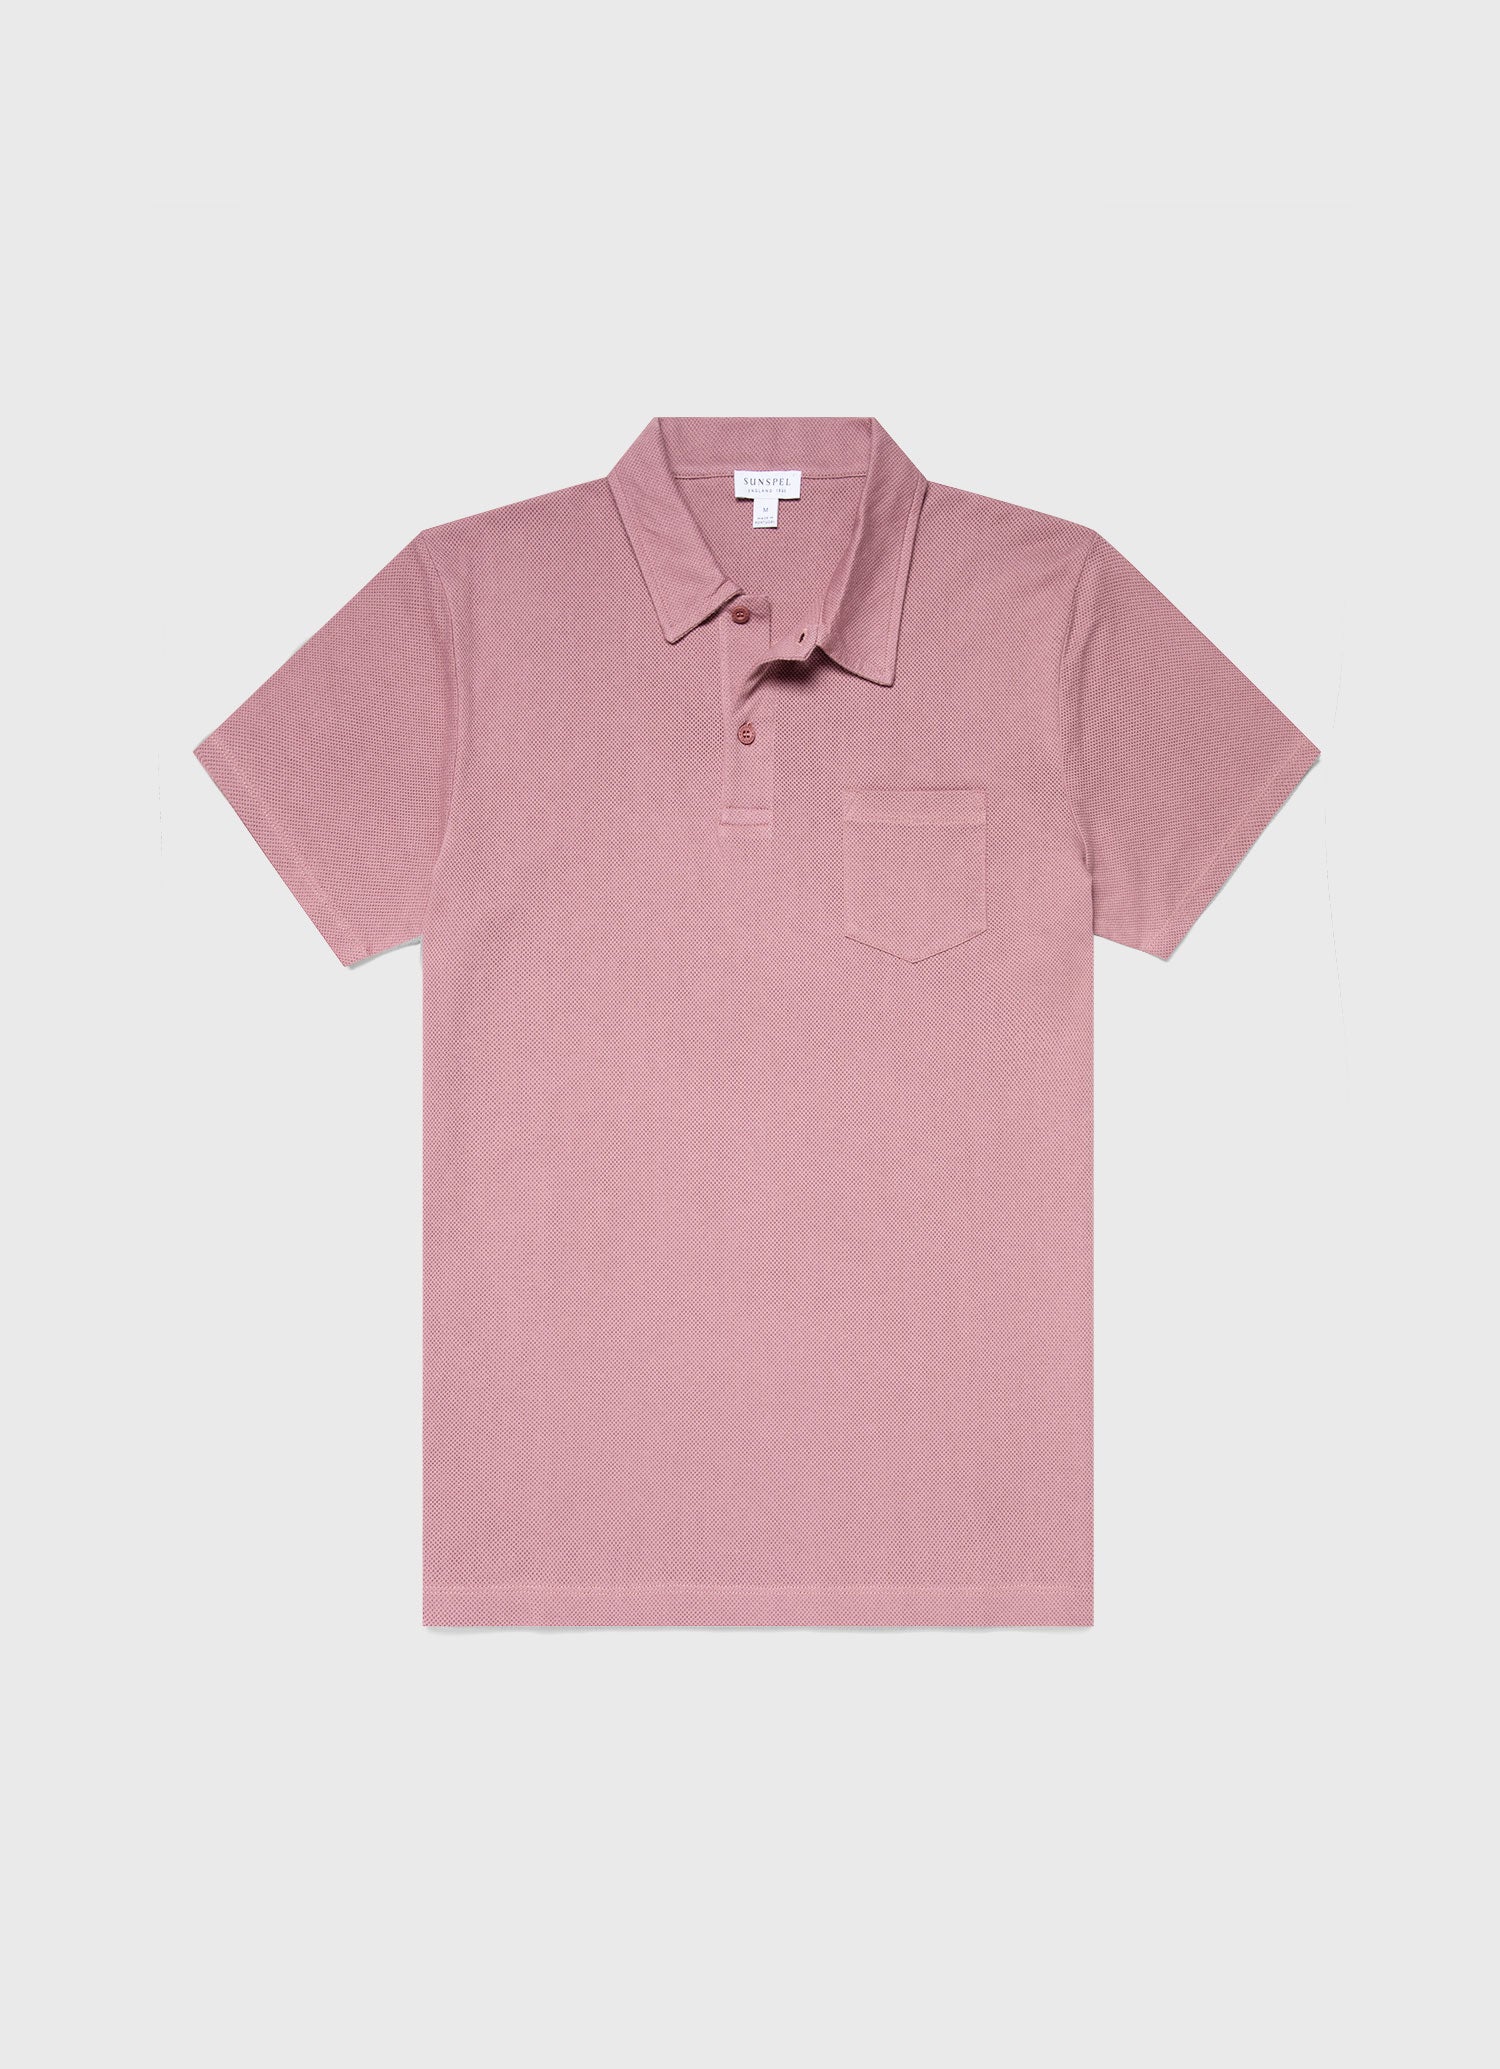 Men's Riviera Polo Shirt in Vintage Pink | Sunspel